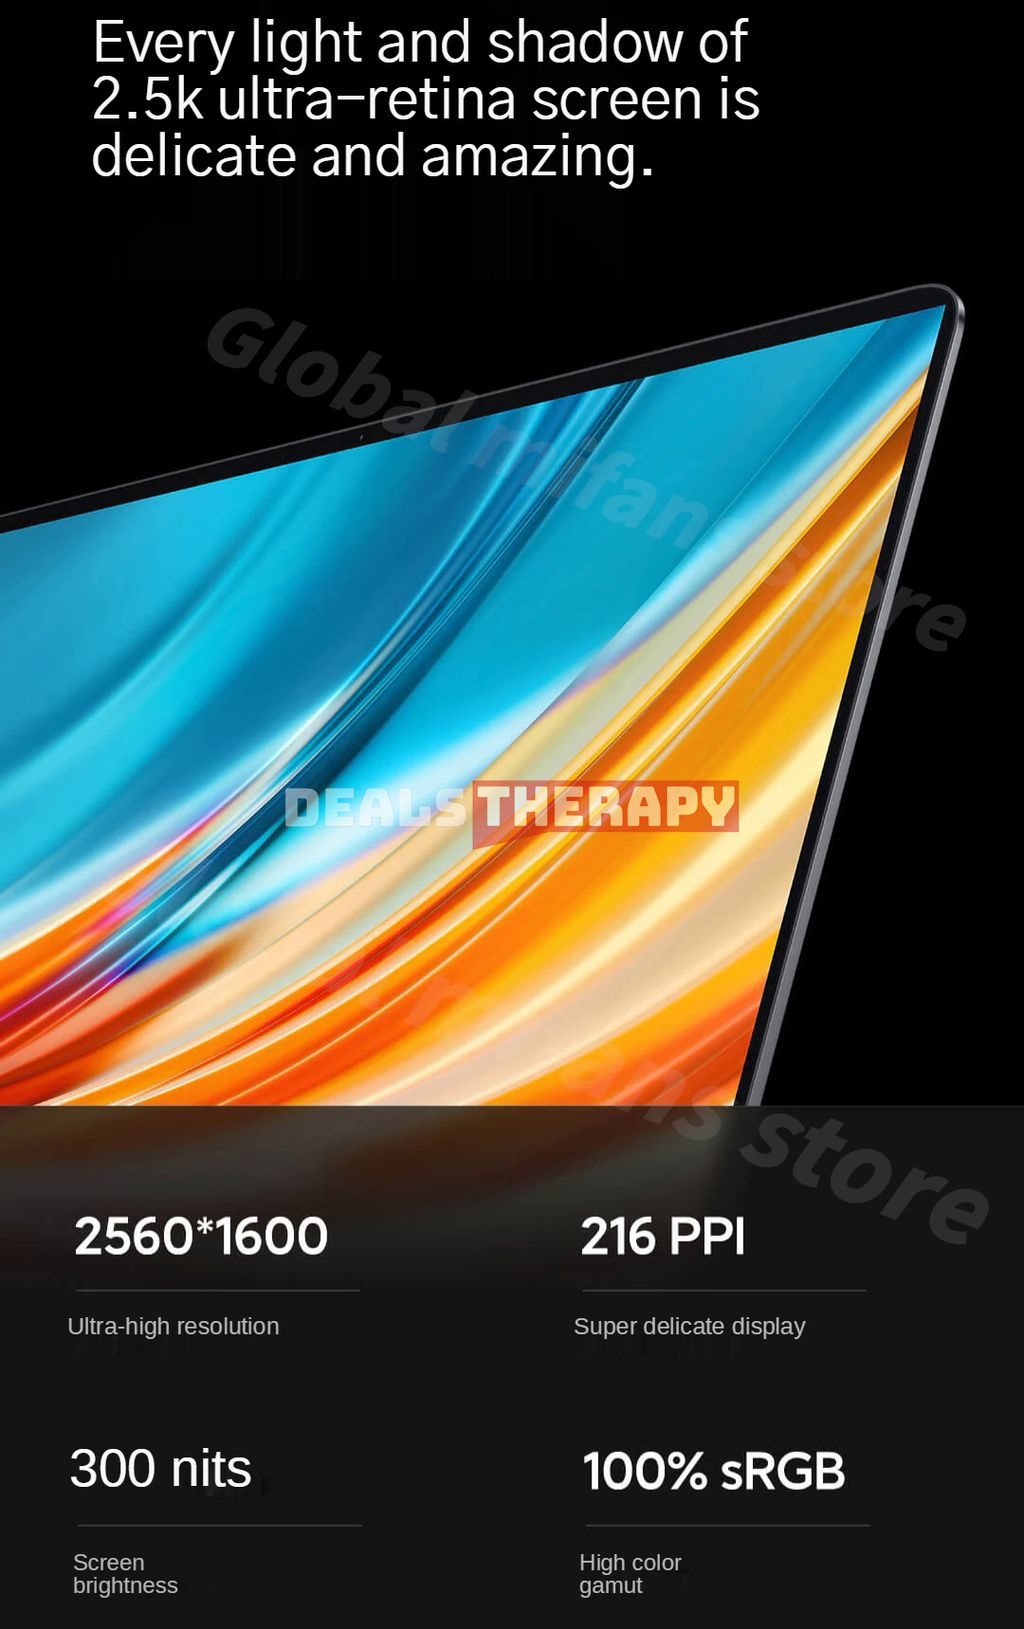 Xiaomi Mi Notebook Pro X 14